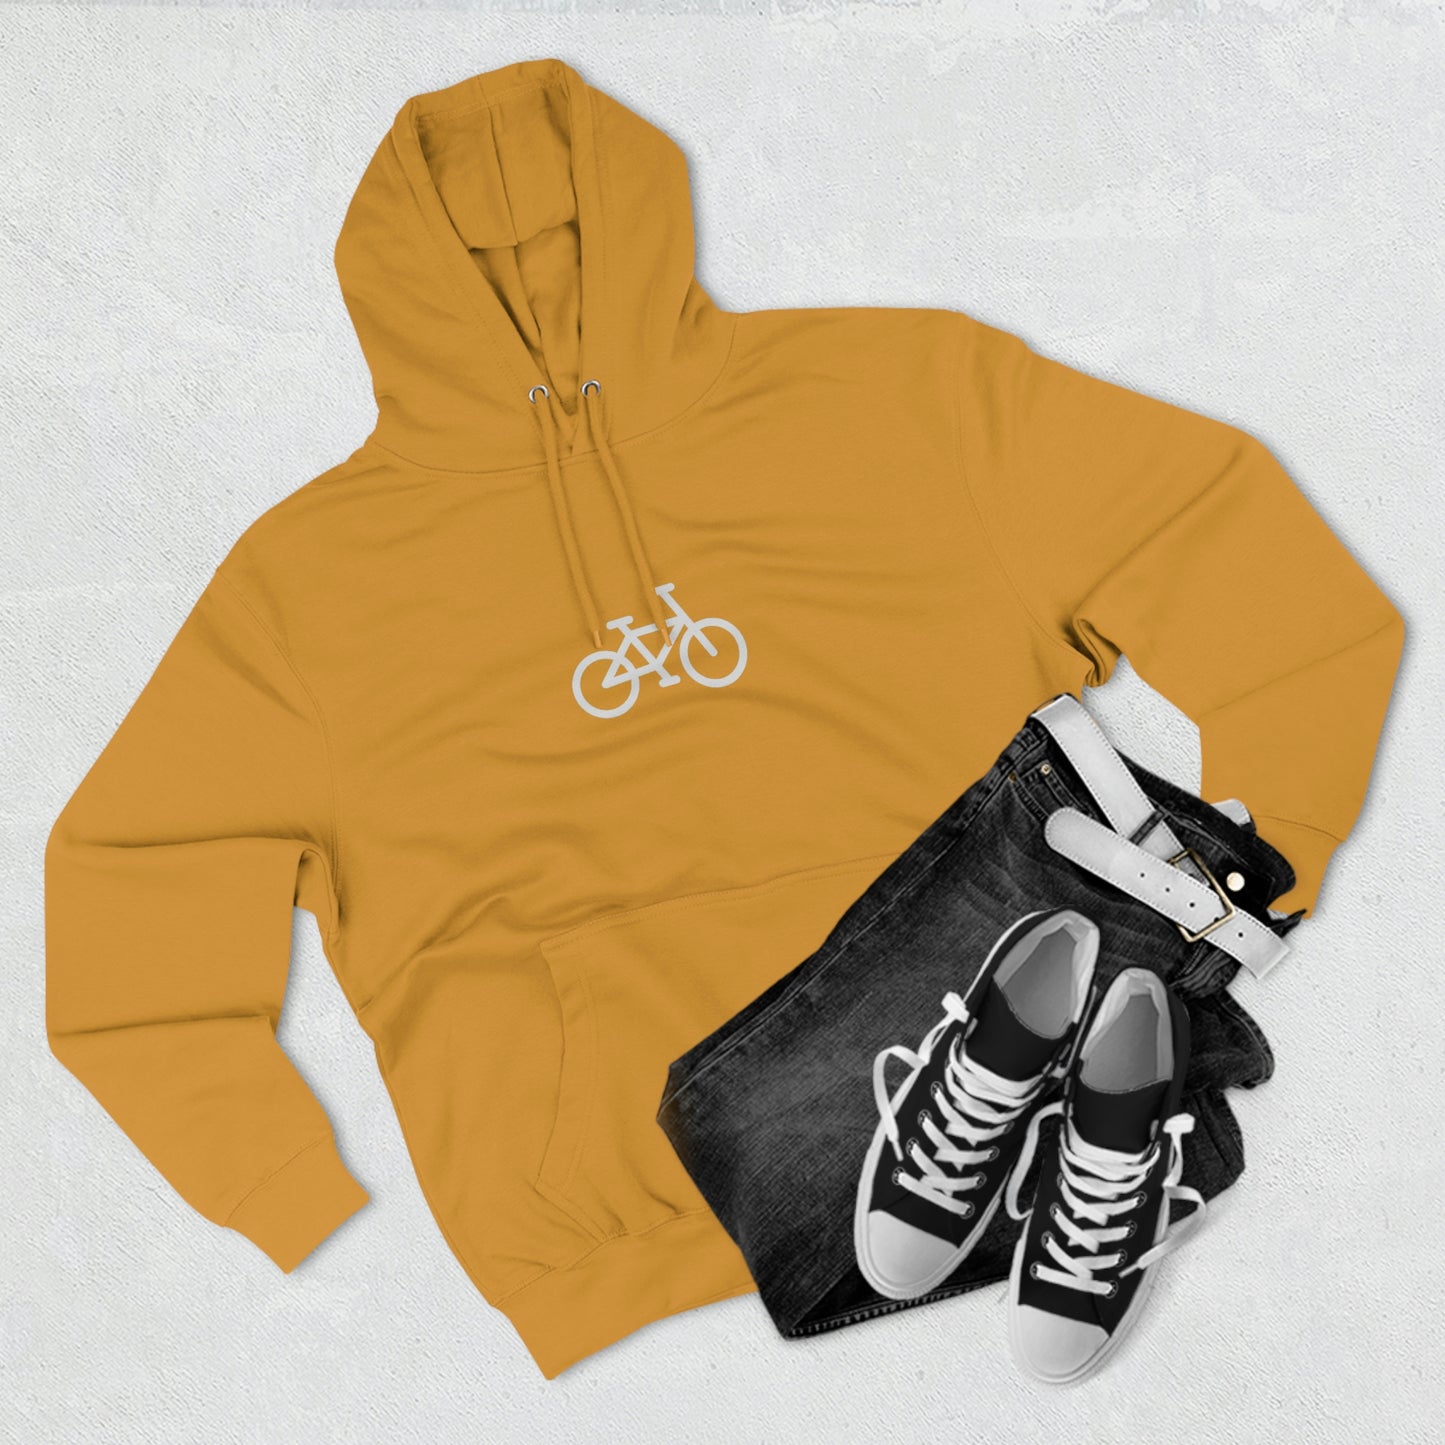 Unisex Premium Pullover Hoodie - Bike Print